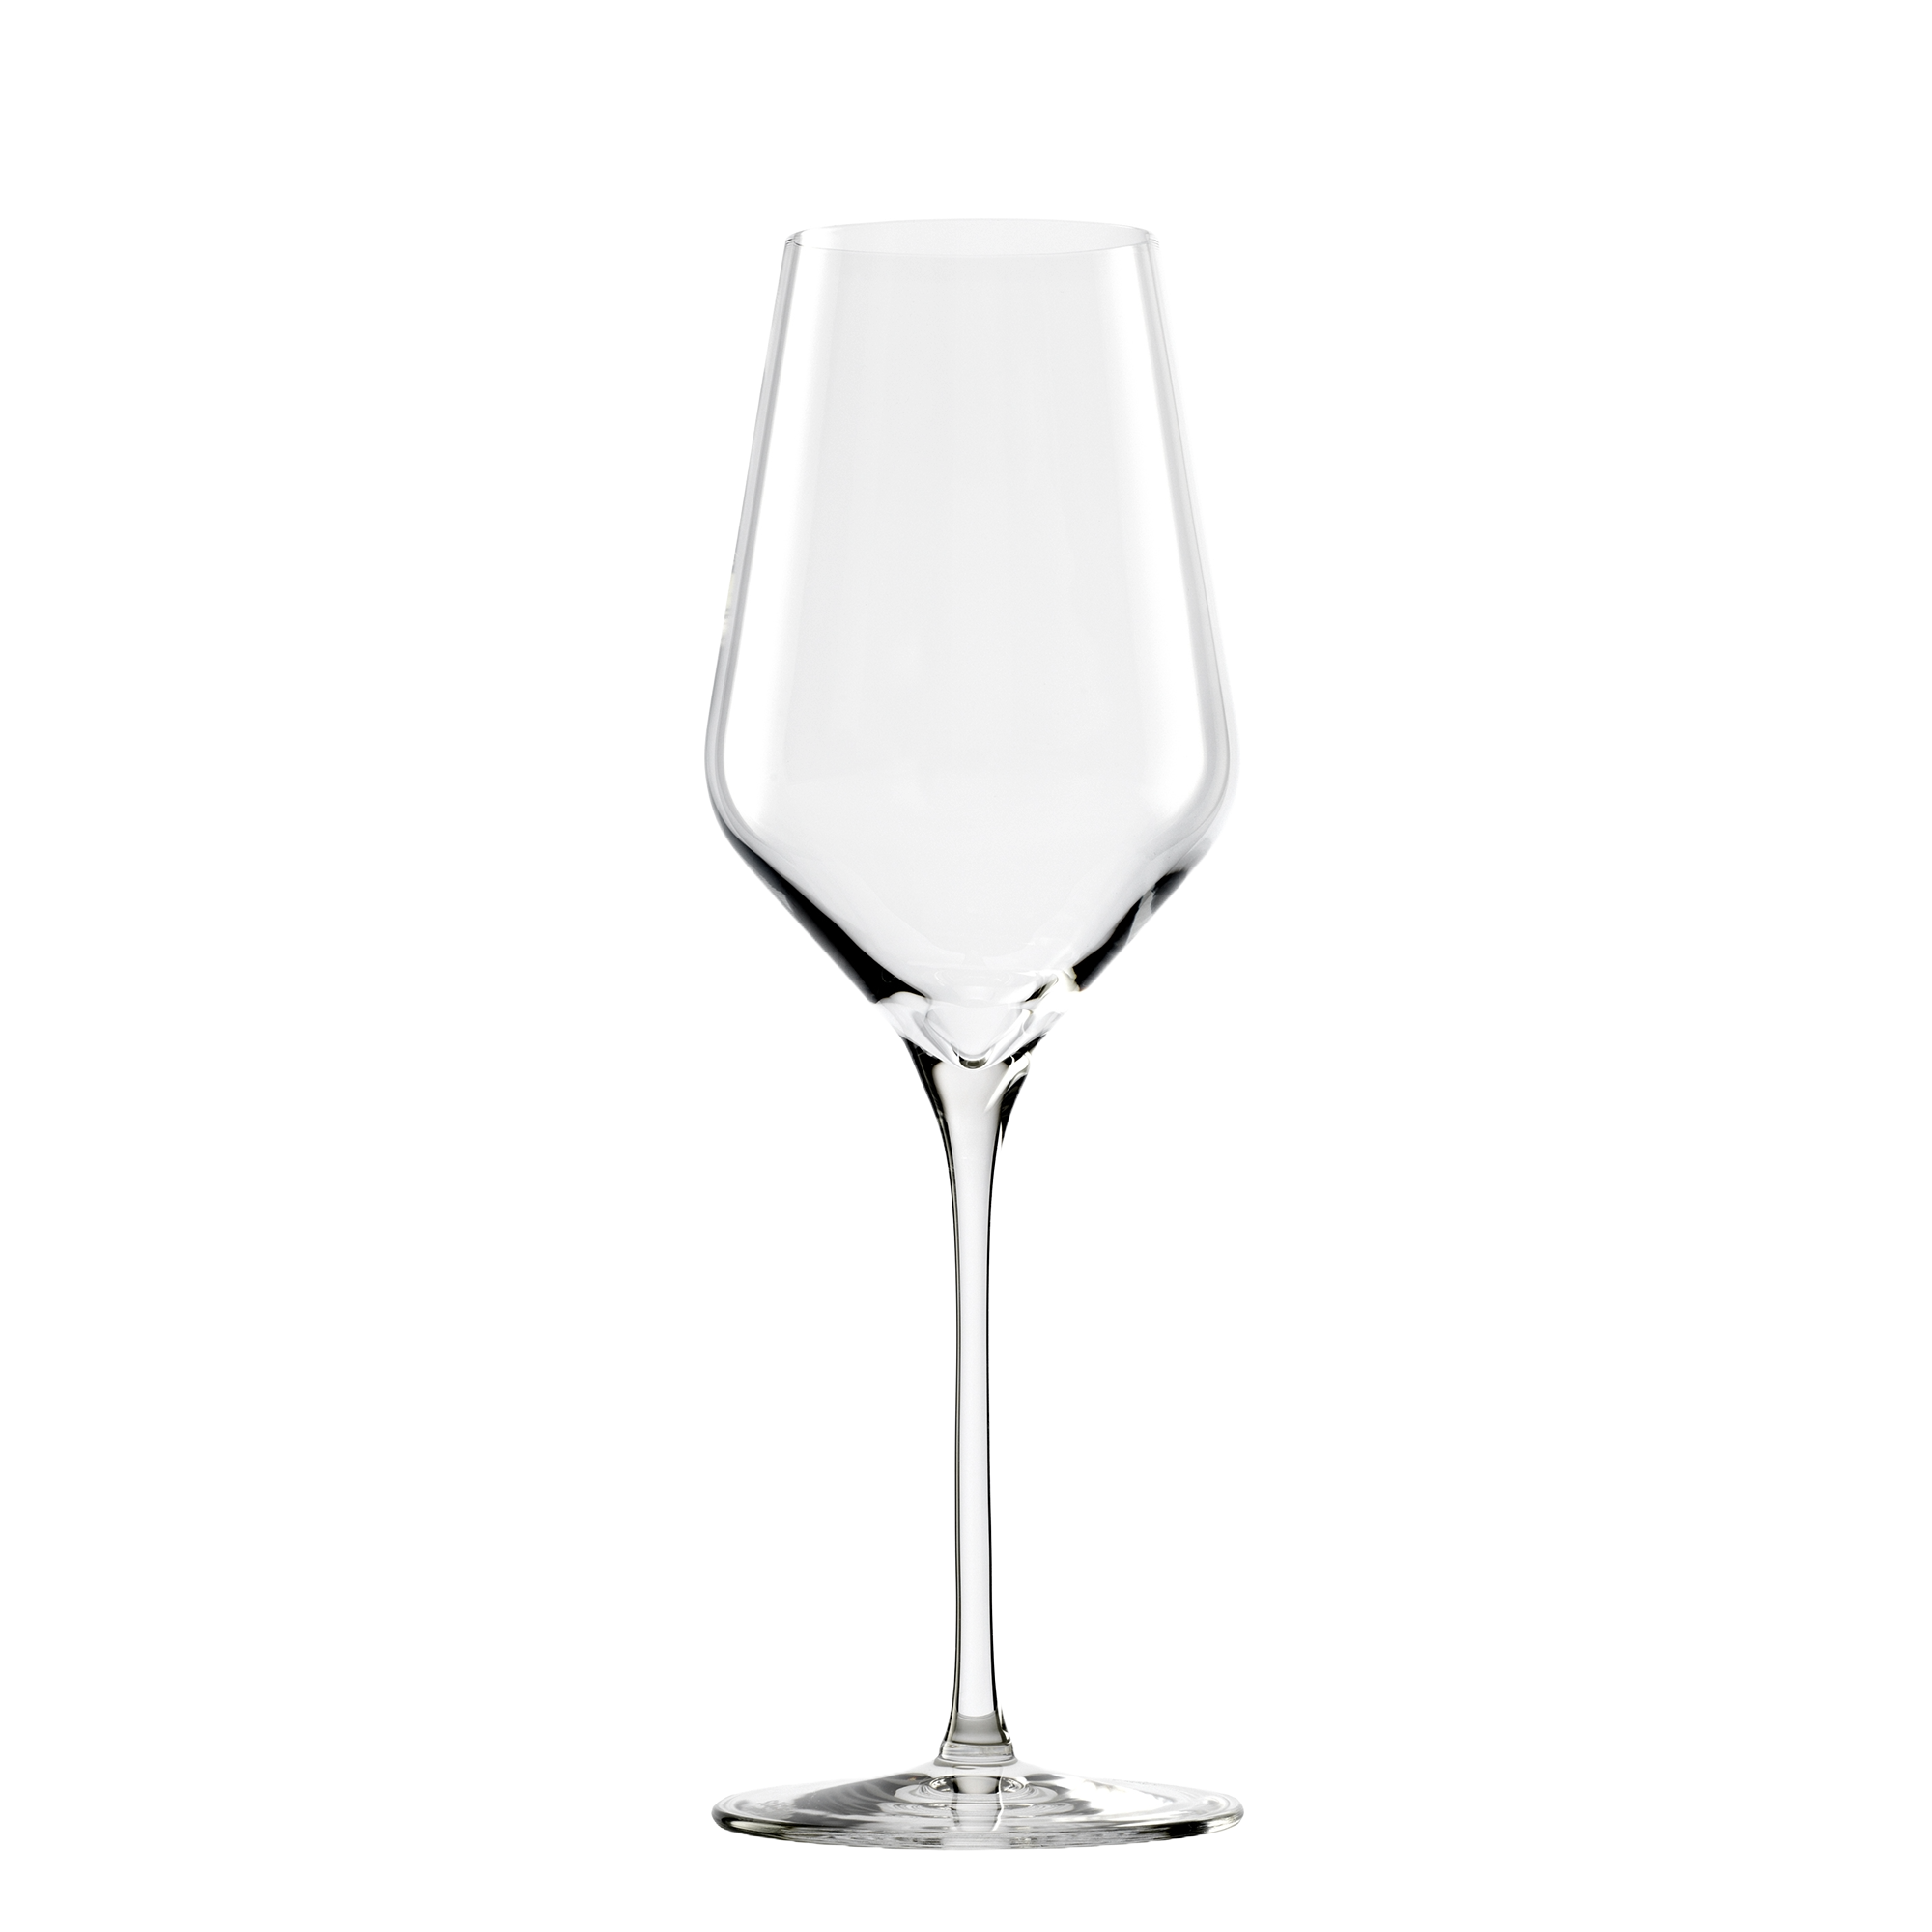 Quatrophil White Wine Glass 14 oz. - Set of 4